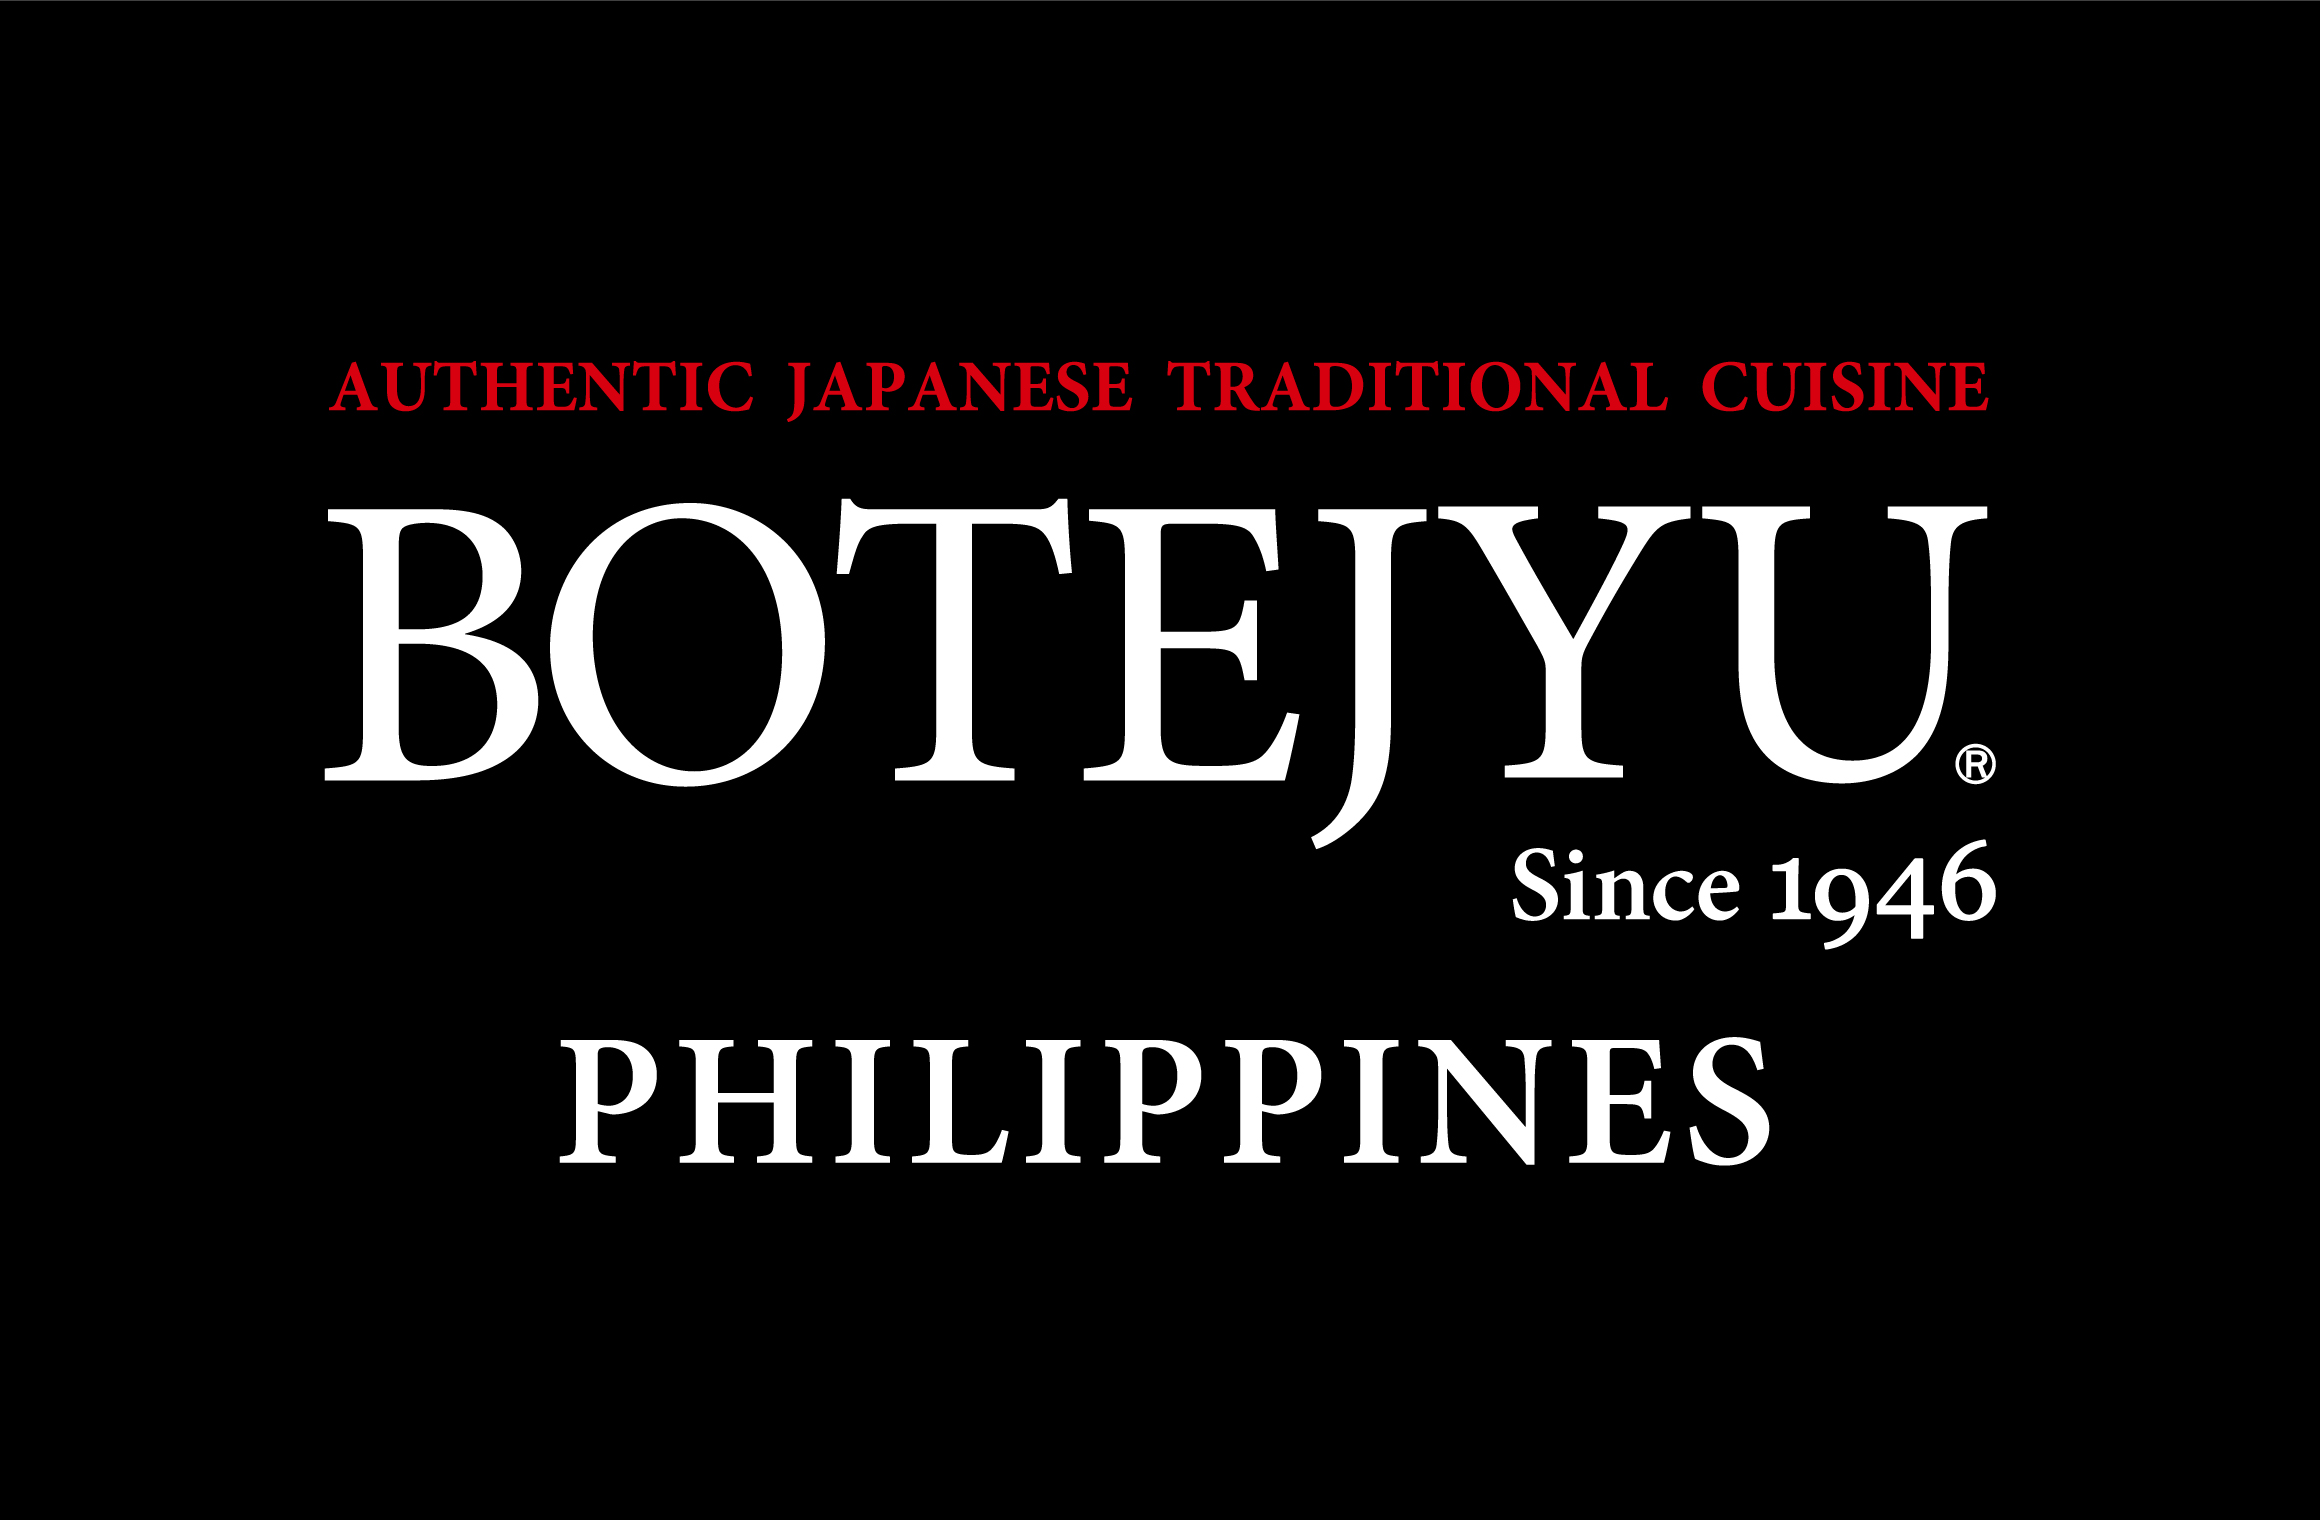 「BOTEJYU® Philippines 41 / SM City Santa Rosa 」: オープニングセレモニーを開催致しました。